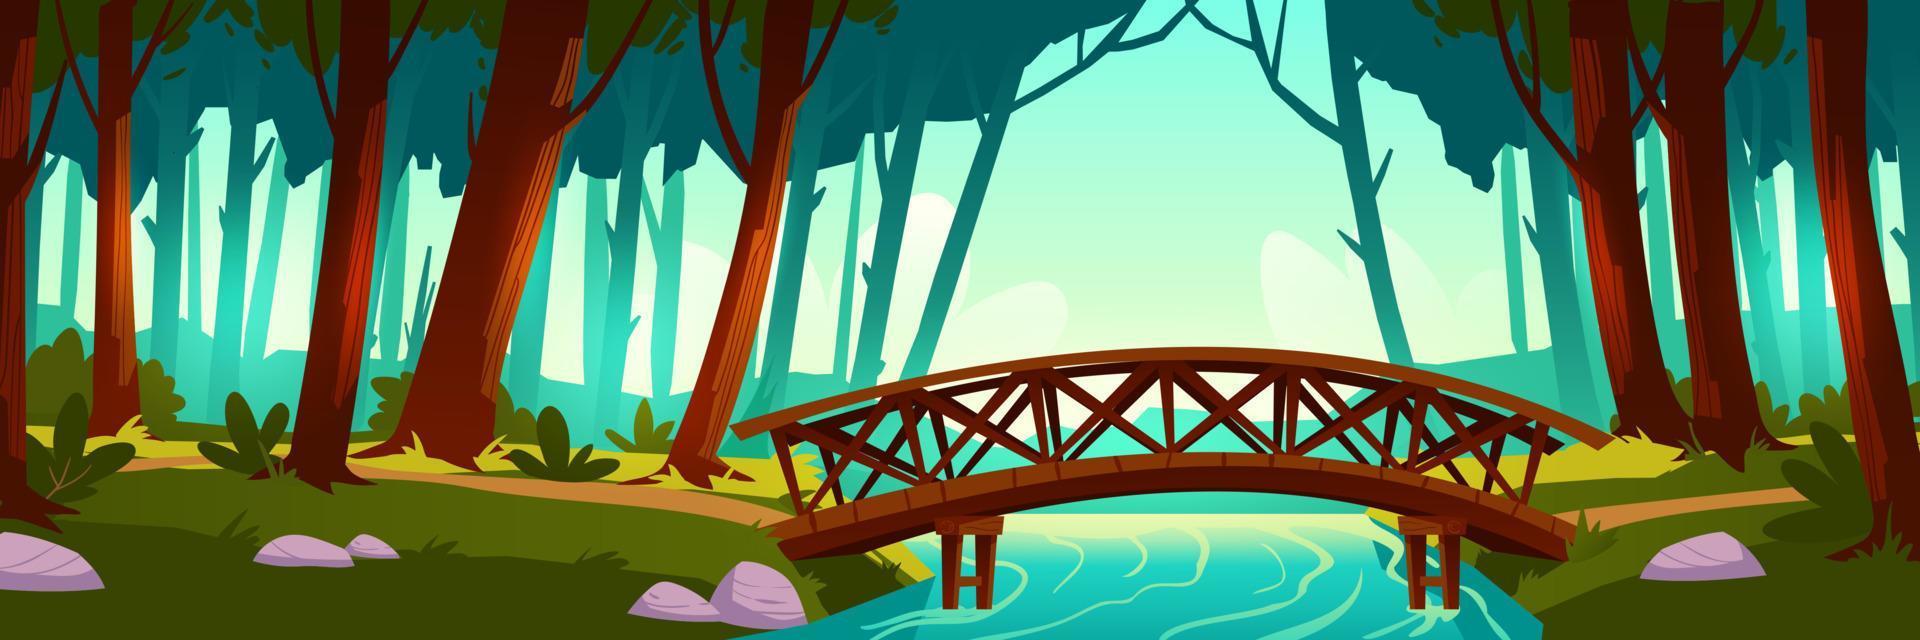 hölzern Brücke Kreuzung Fluss im Wald vektor